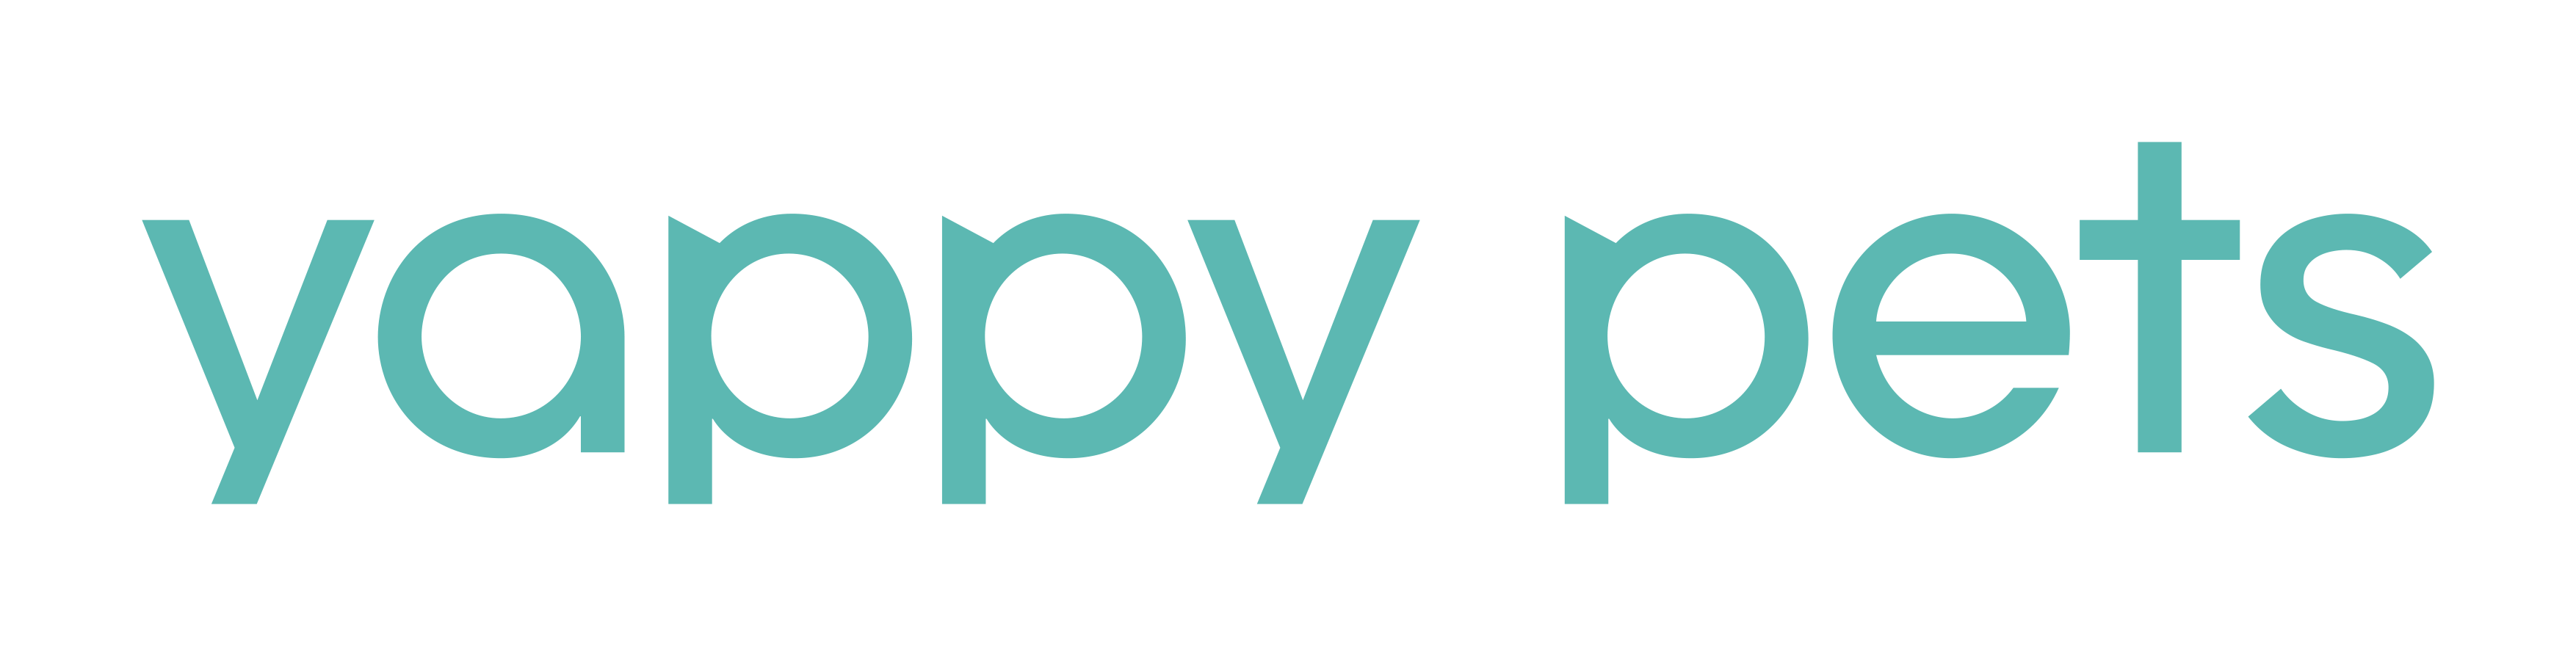 Yappy Pets Pte. Ltd. logo